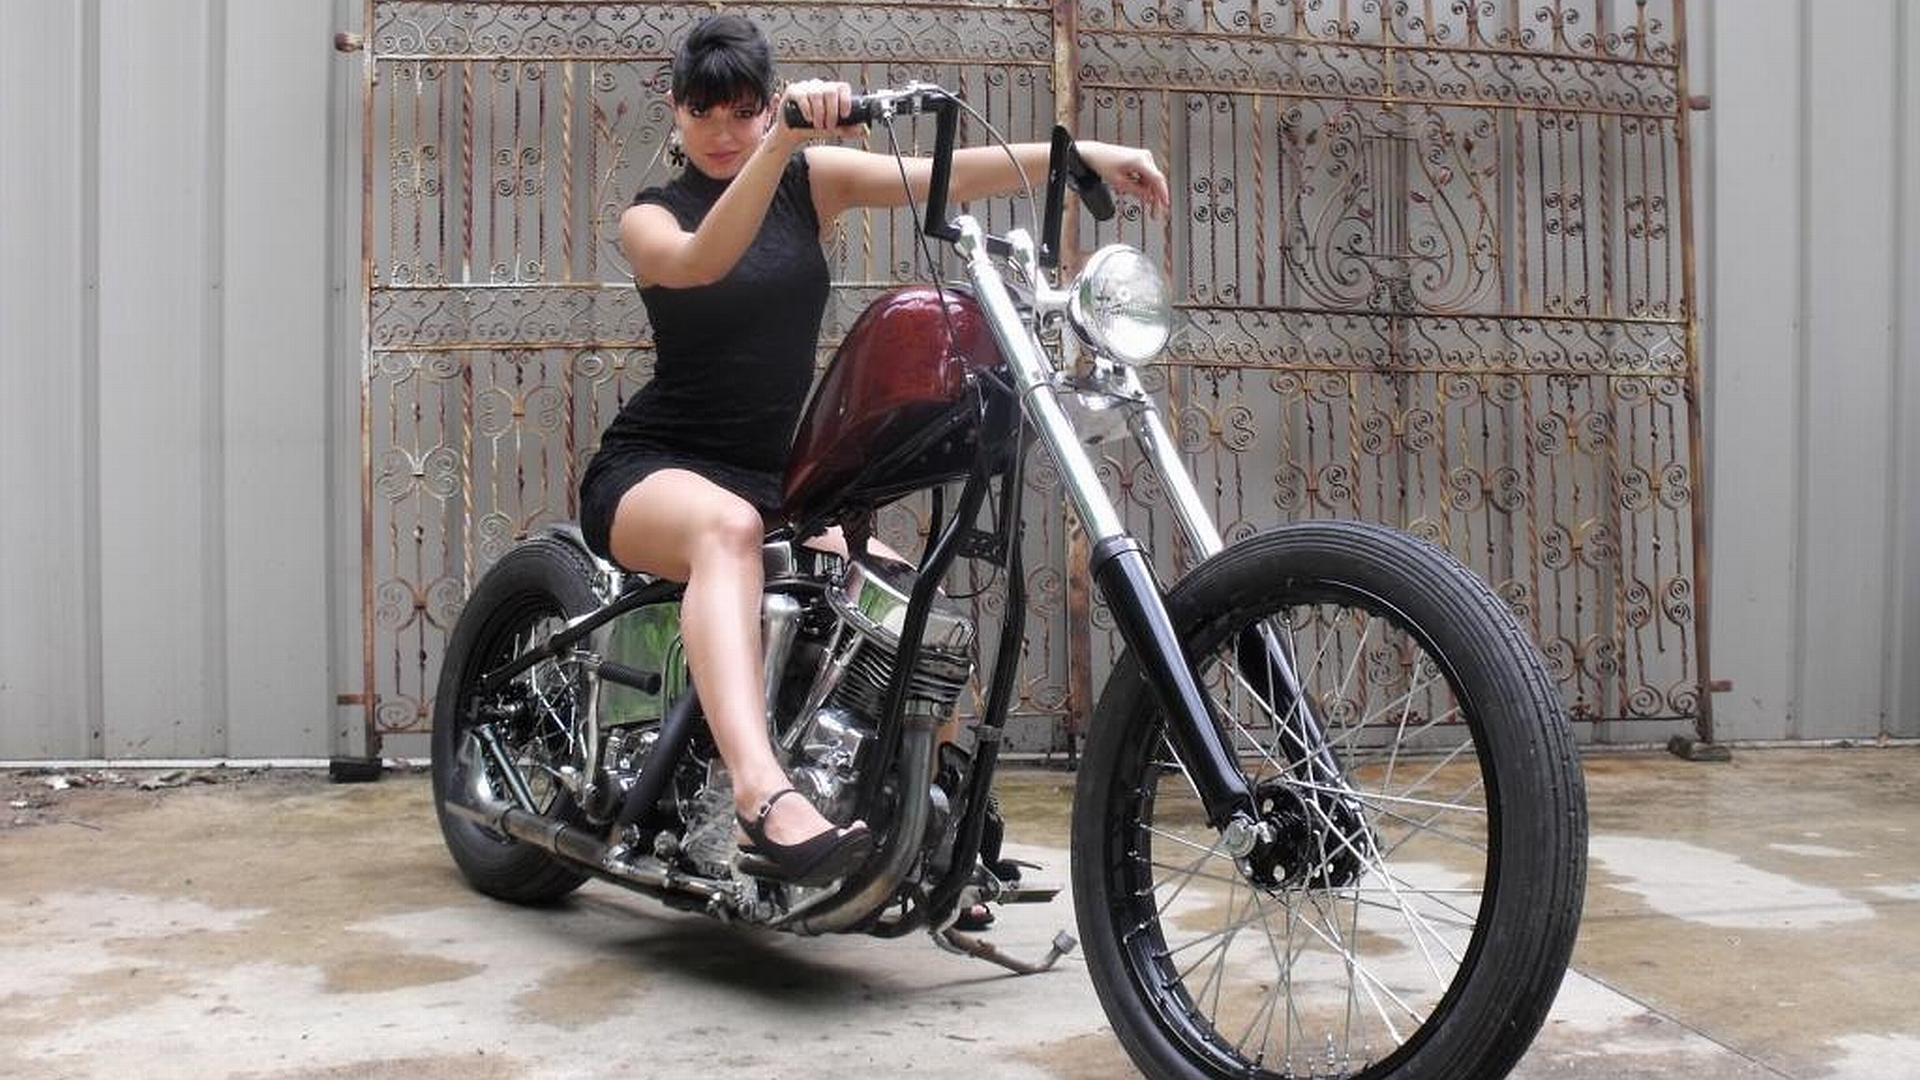 Women Girls & Motorcycles HD Wallpaper | Background Image